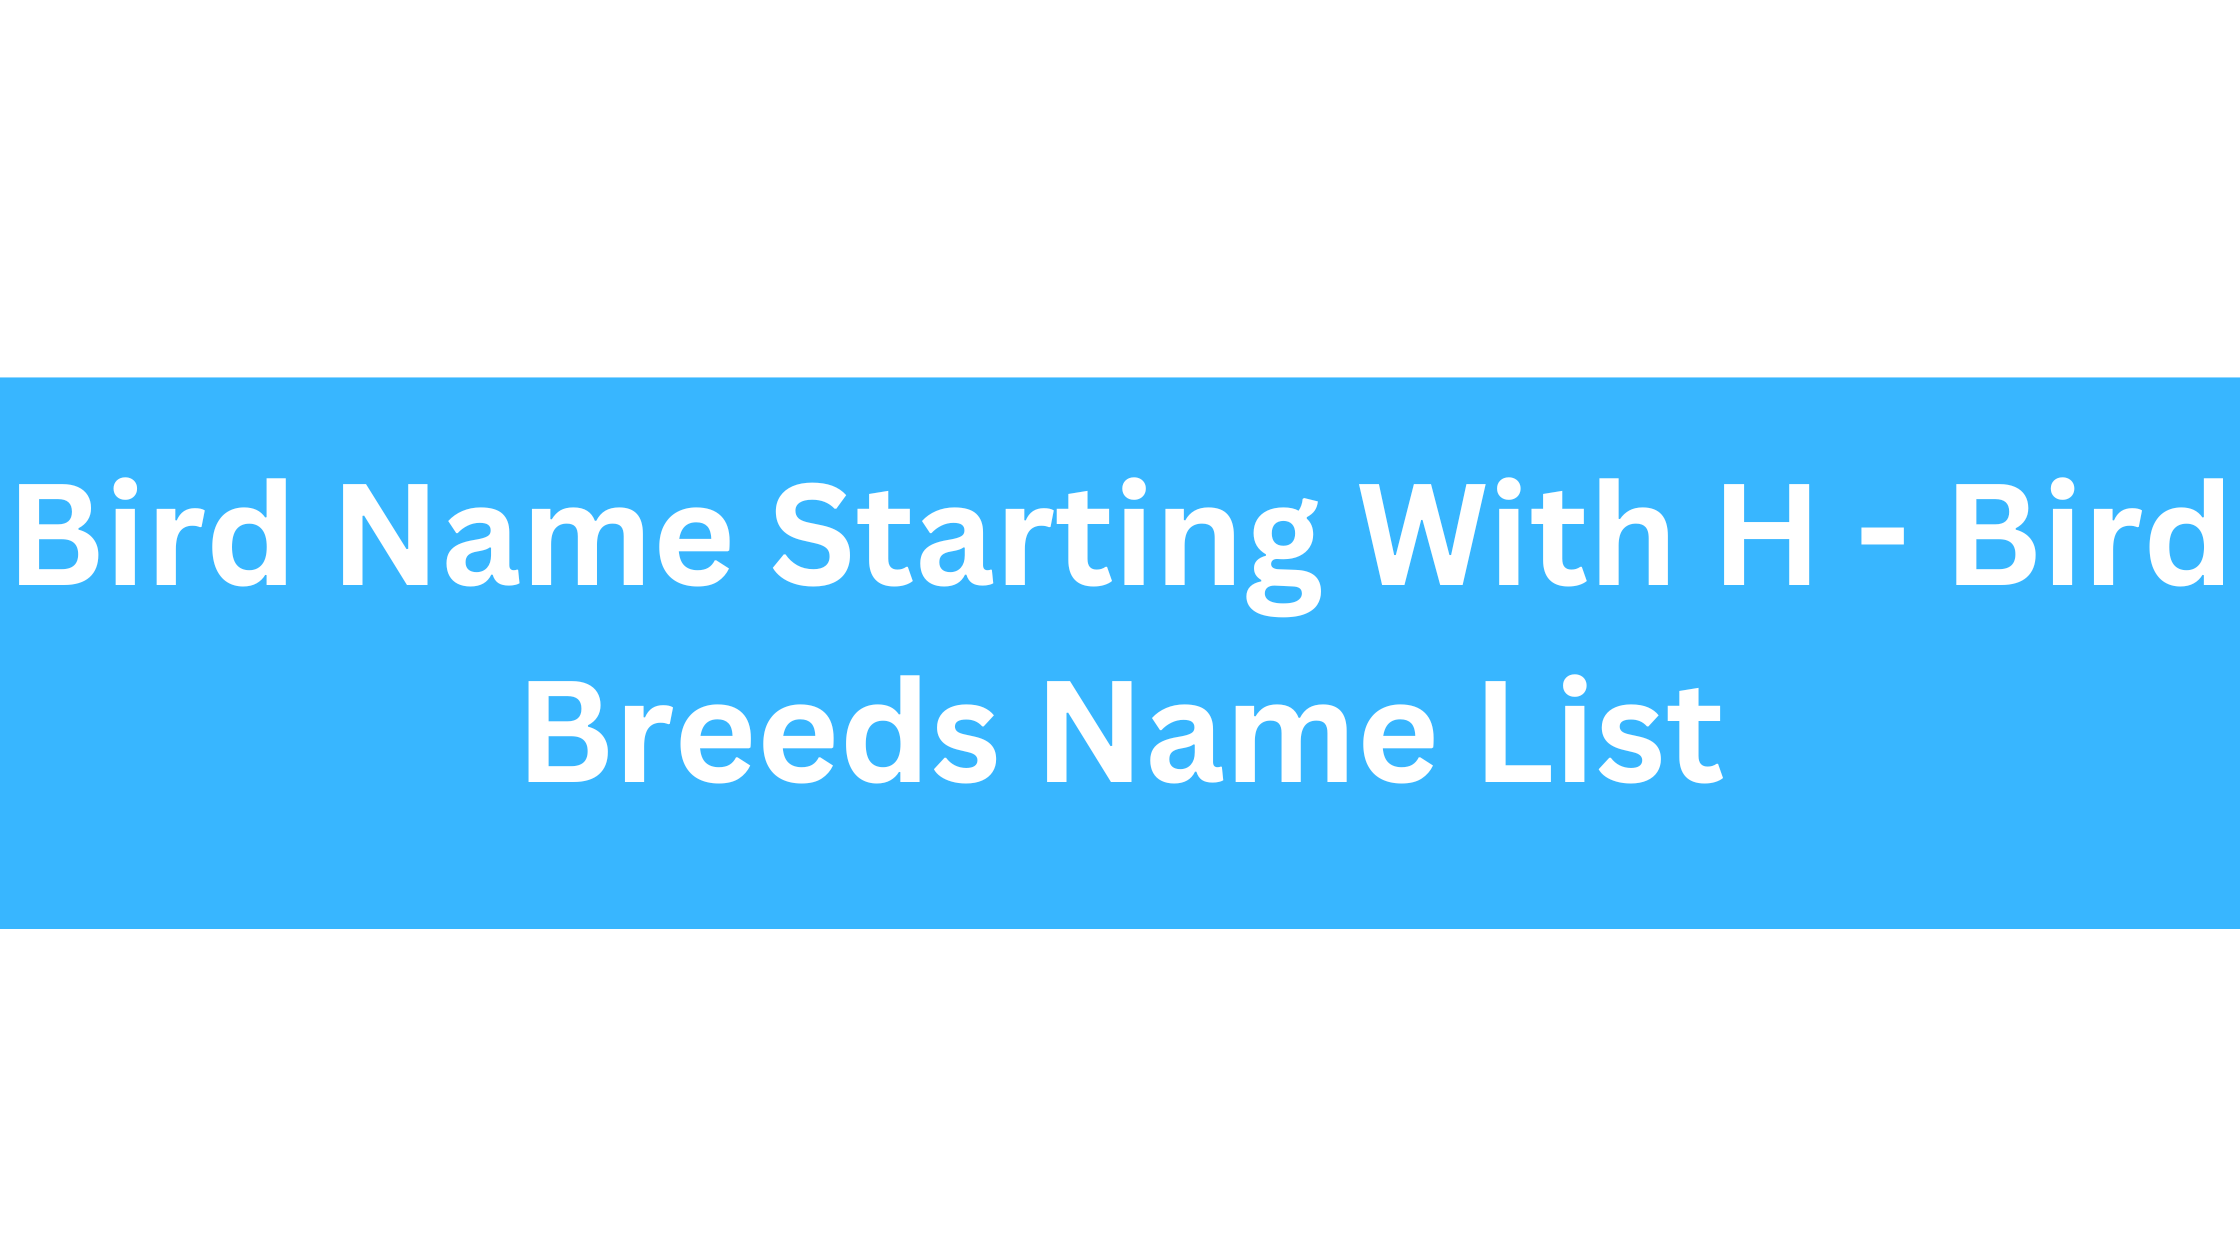 Bird Name Starting With H